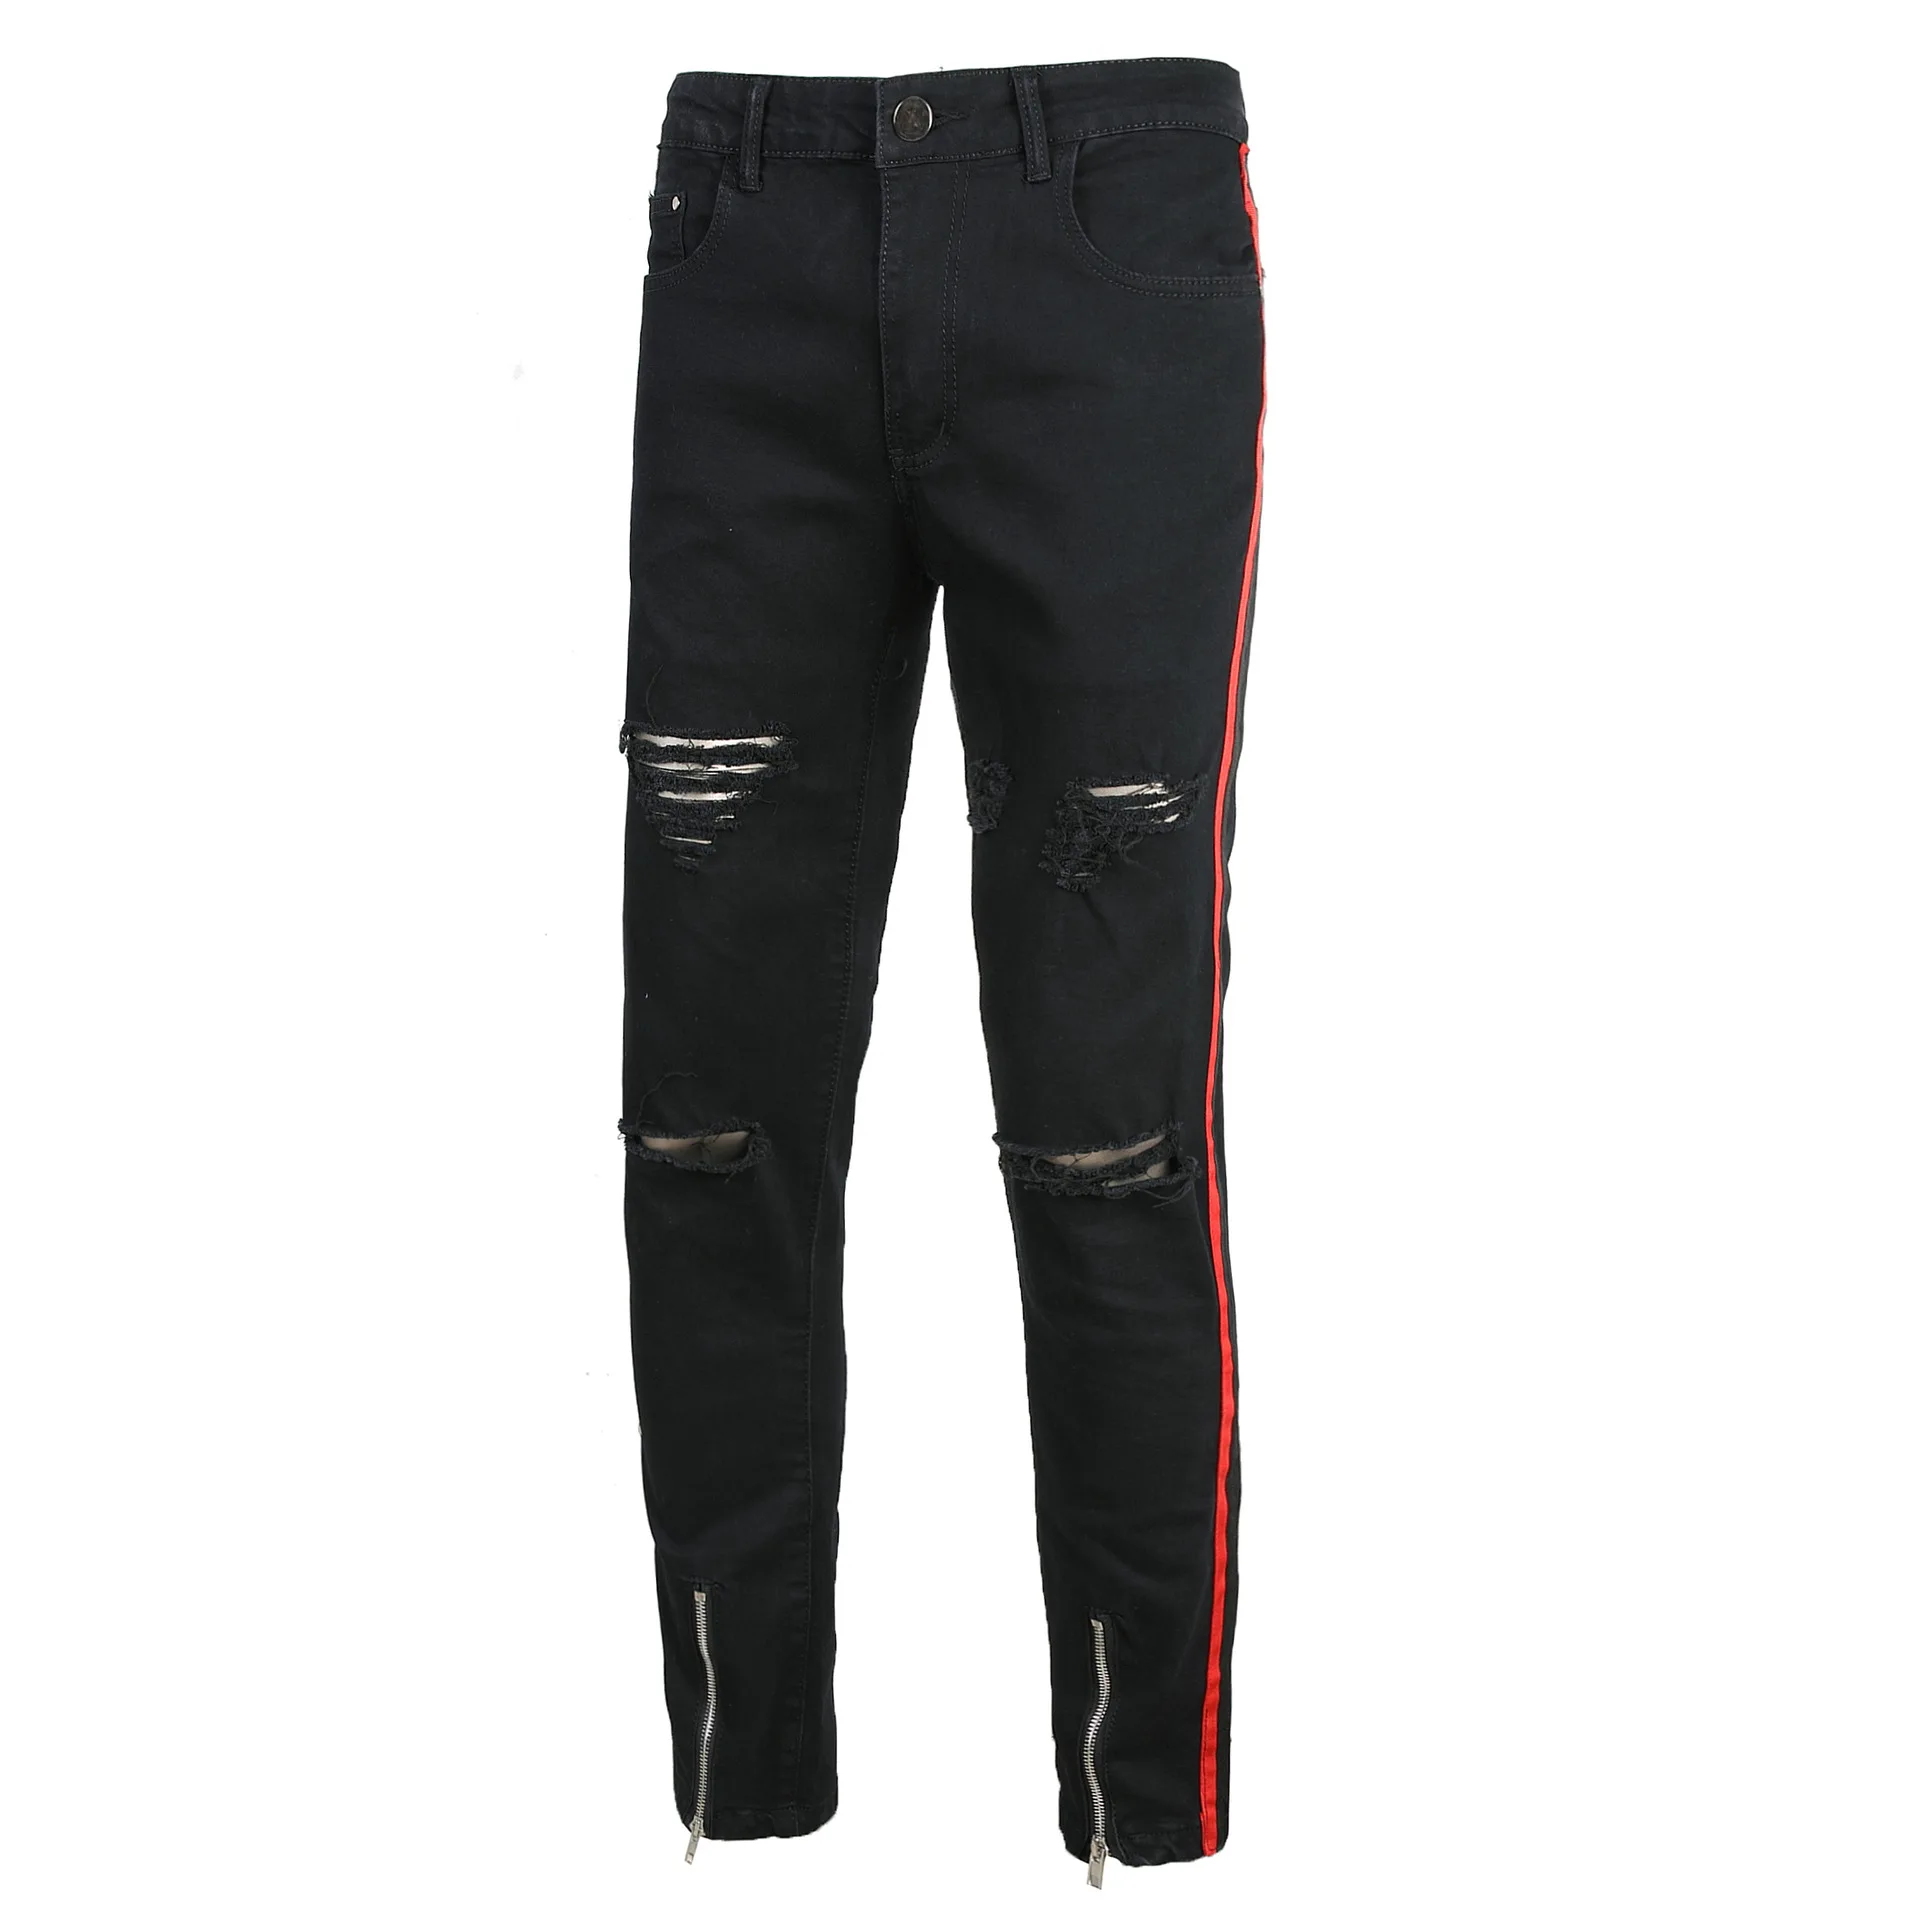 Men's Ribbon Black Hole Stretch Zip Jeans Stretch Denim Pants Slim Fit Trousers classic jeans male Designer Casual skinny